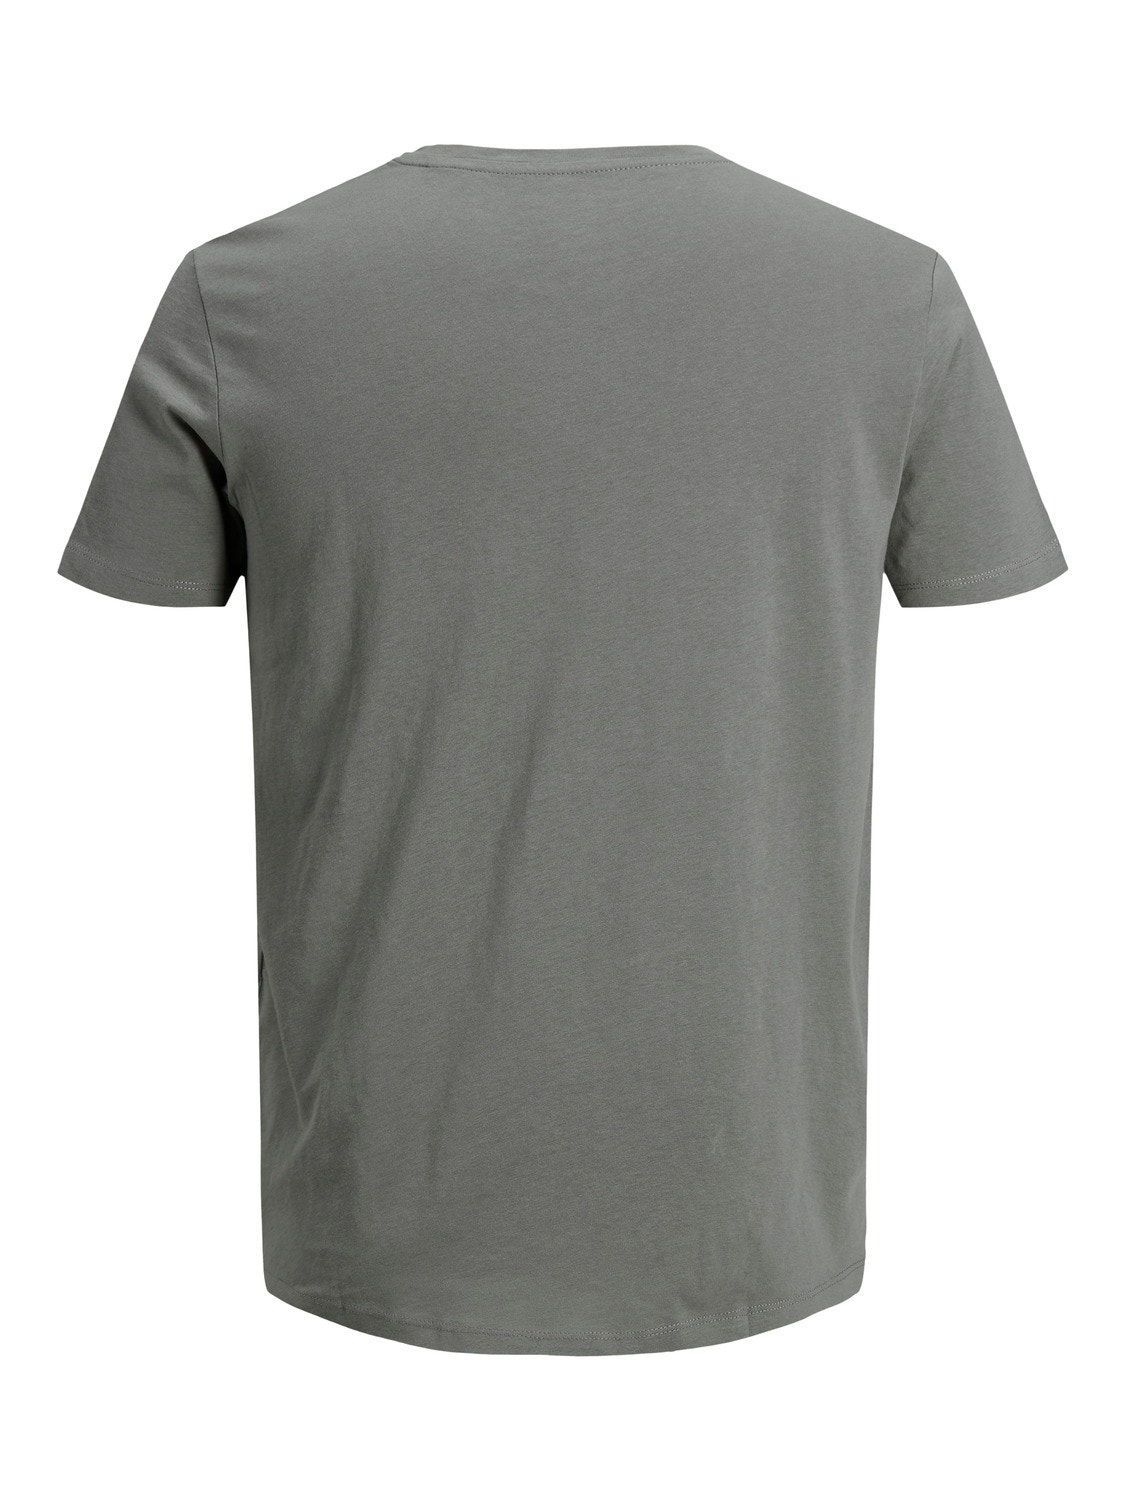 Jack & Jones Plain Crew neck T-shirt -Sedona Sage - 12113648